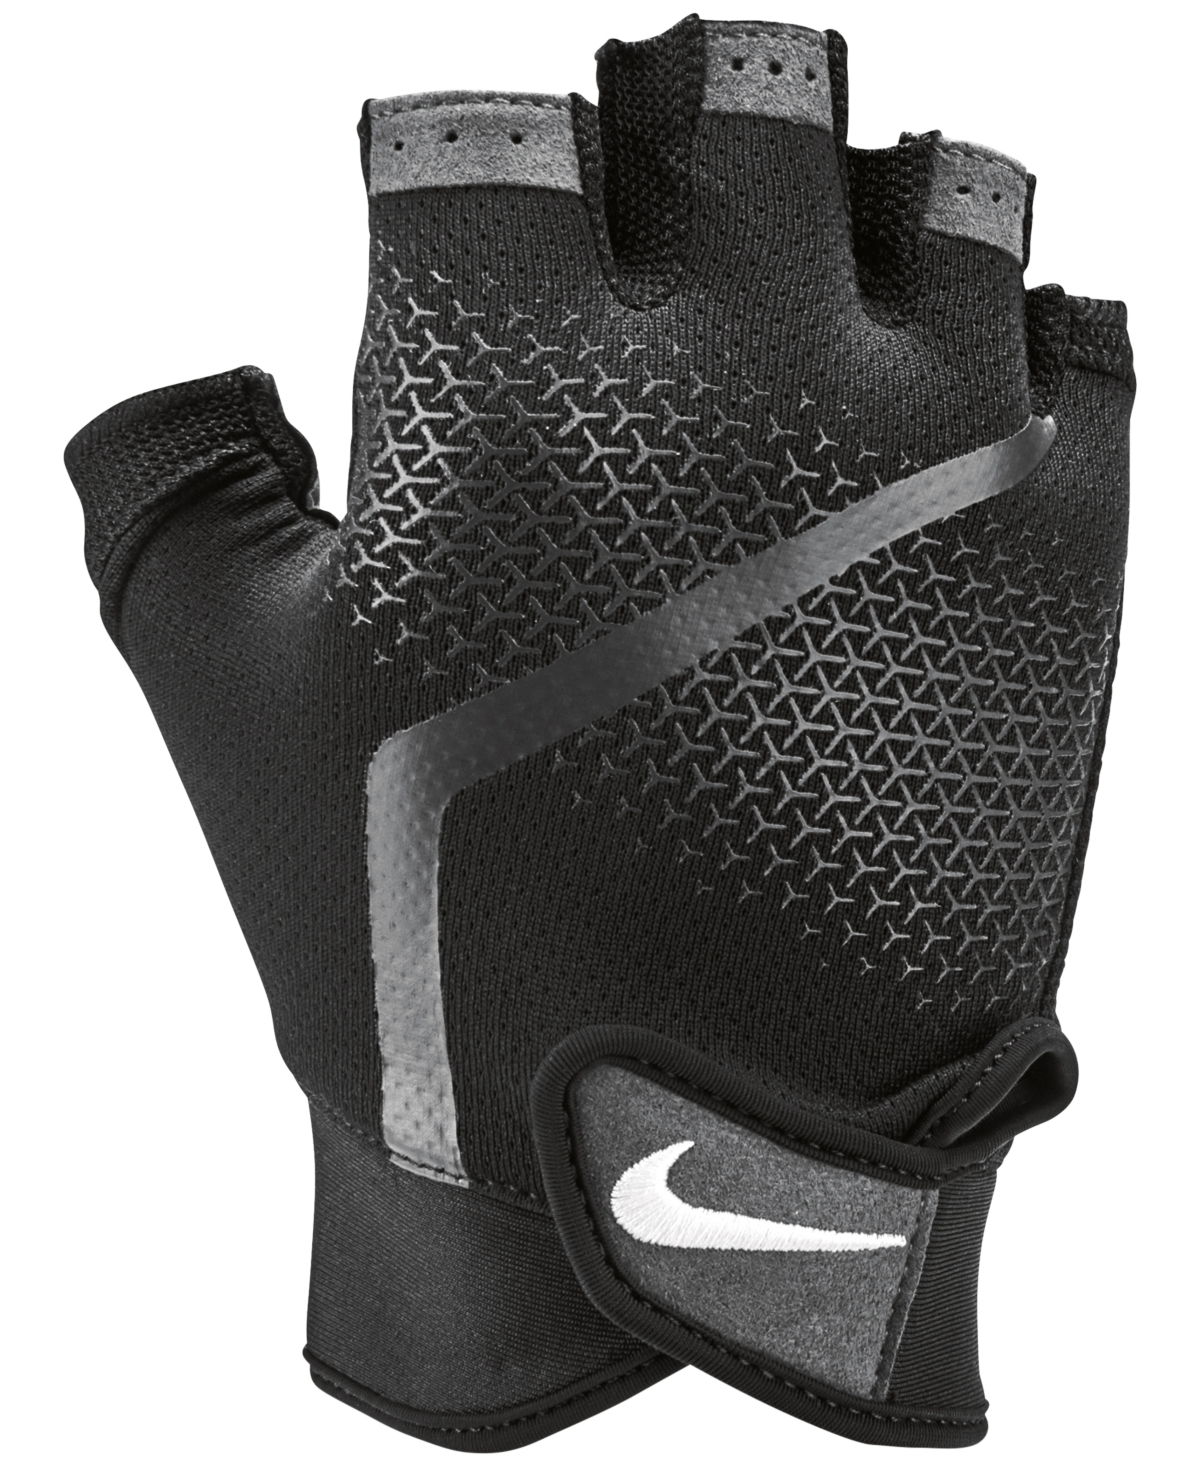 Men's Extreme Fitness Gloves - Black/Grey